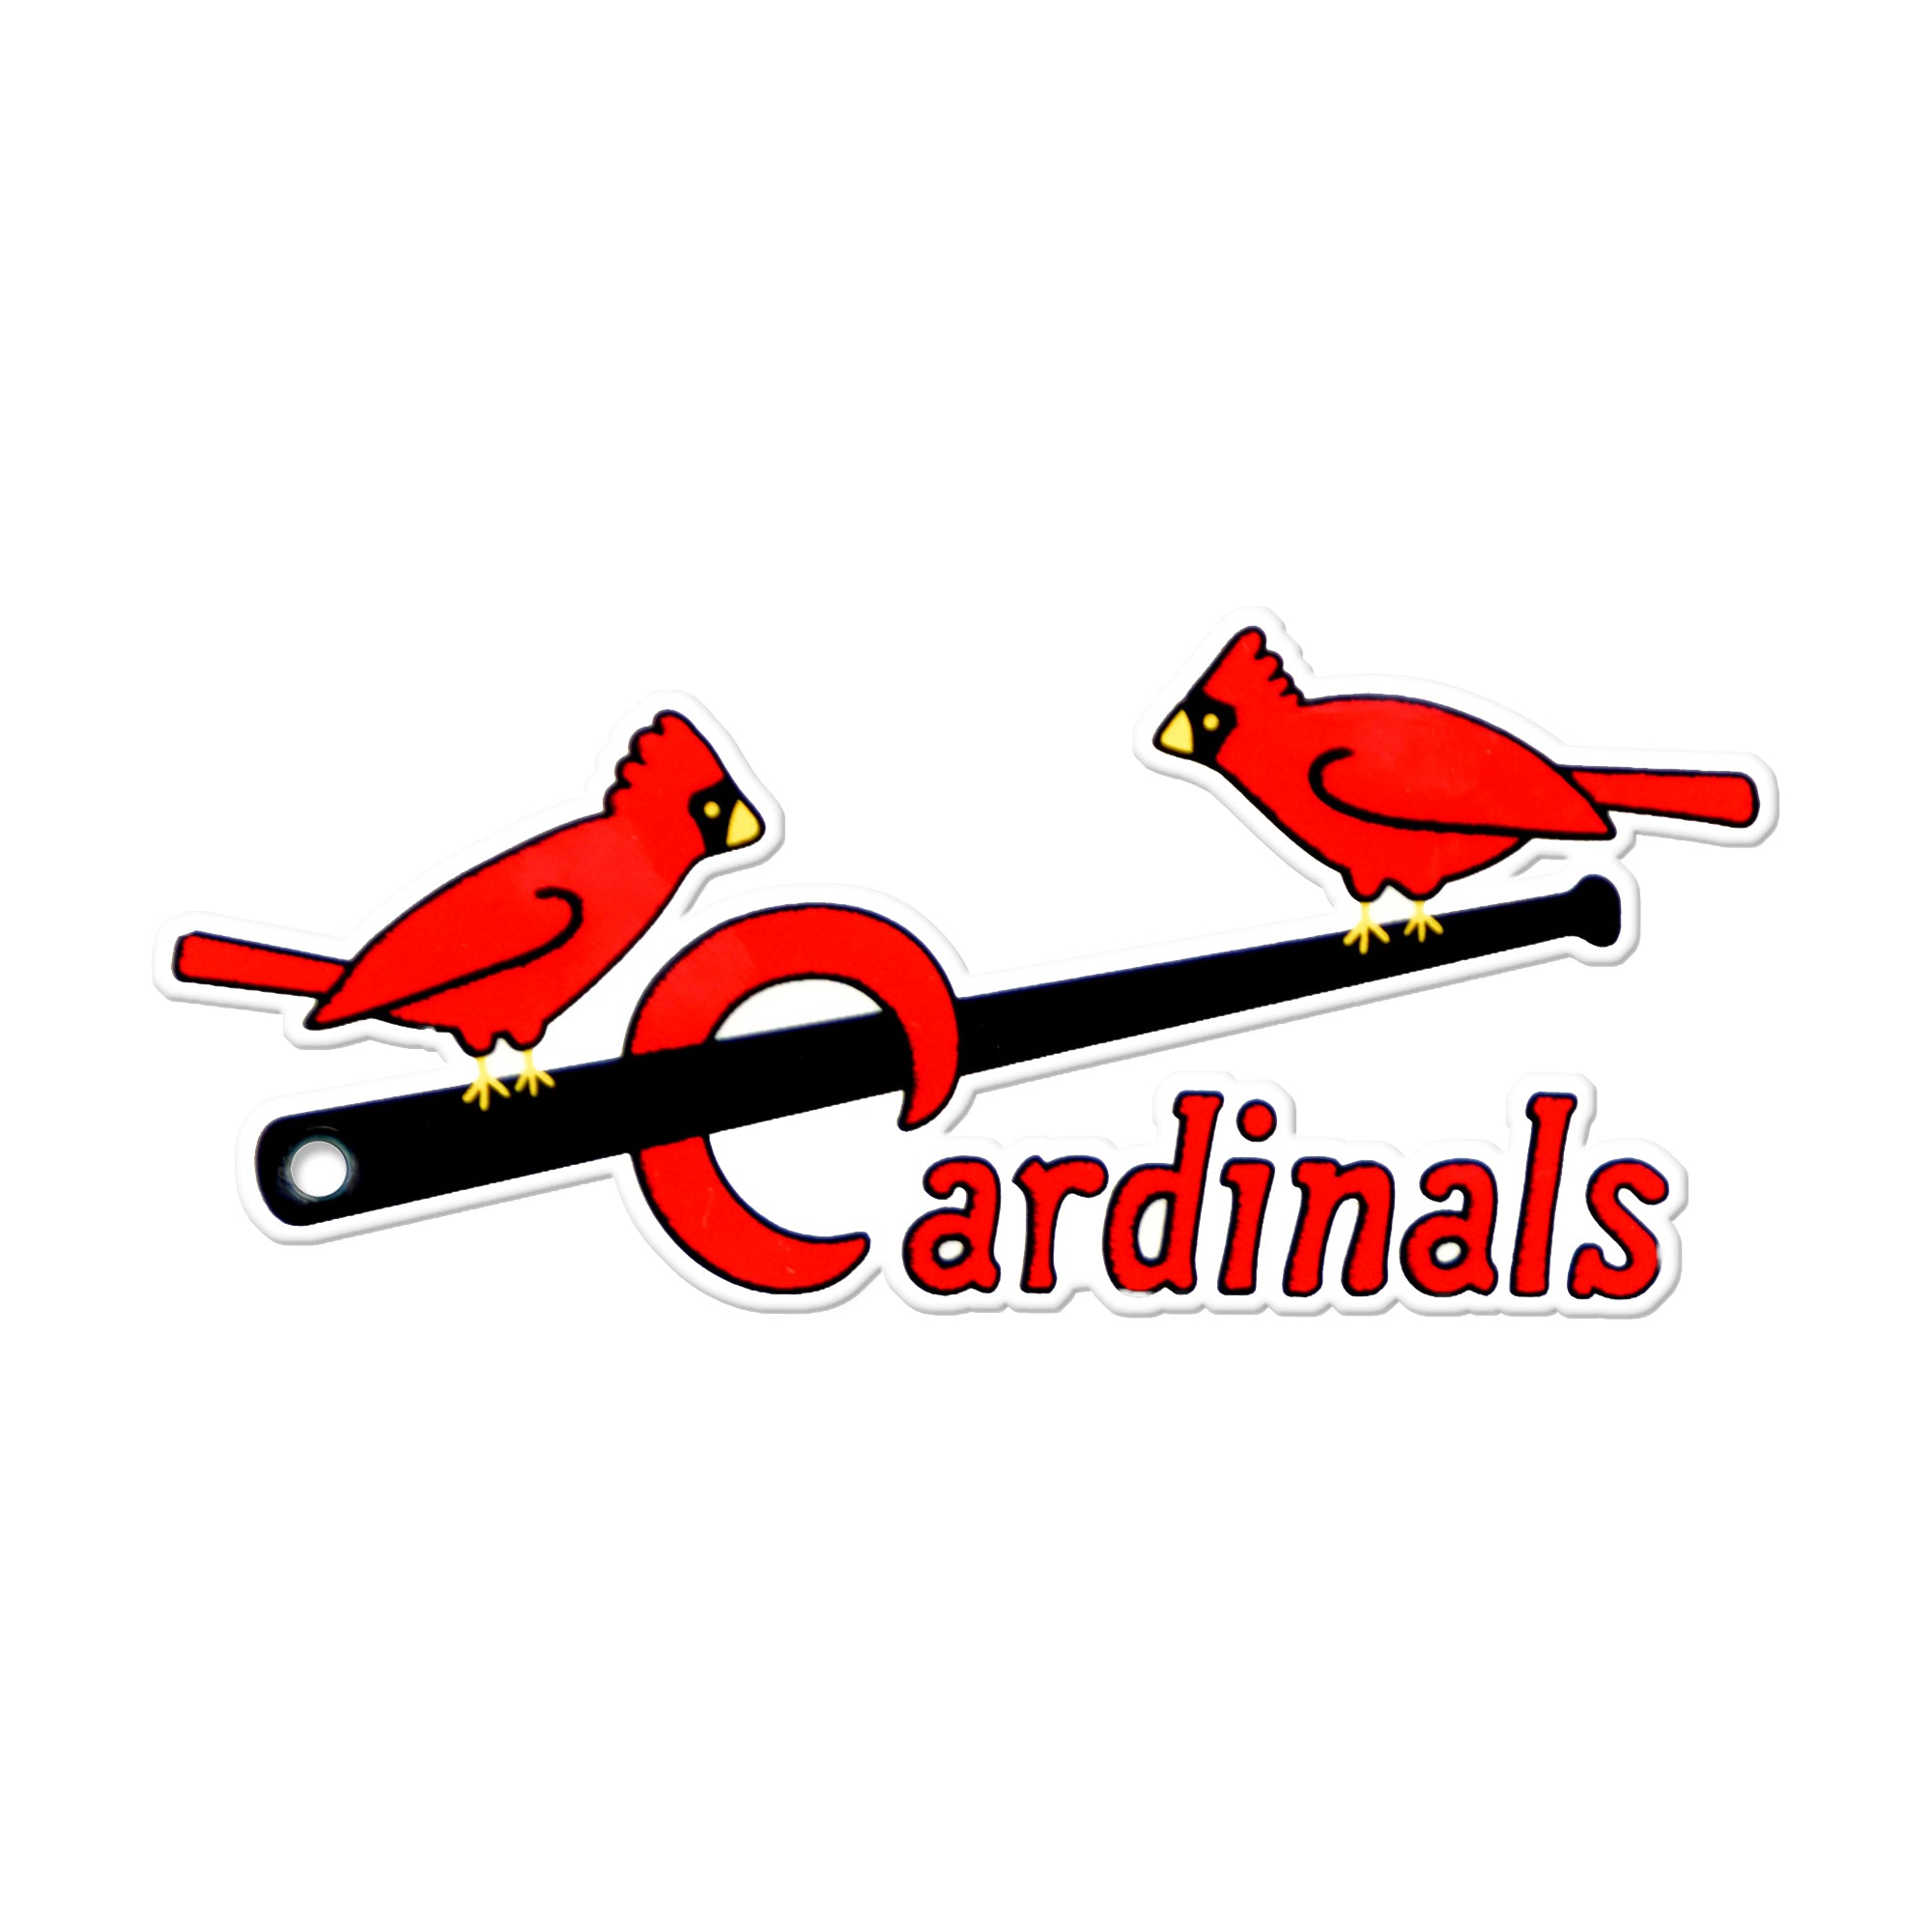 St. Louis Cardinals Baseball Mat - Retro Collection